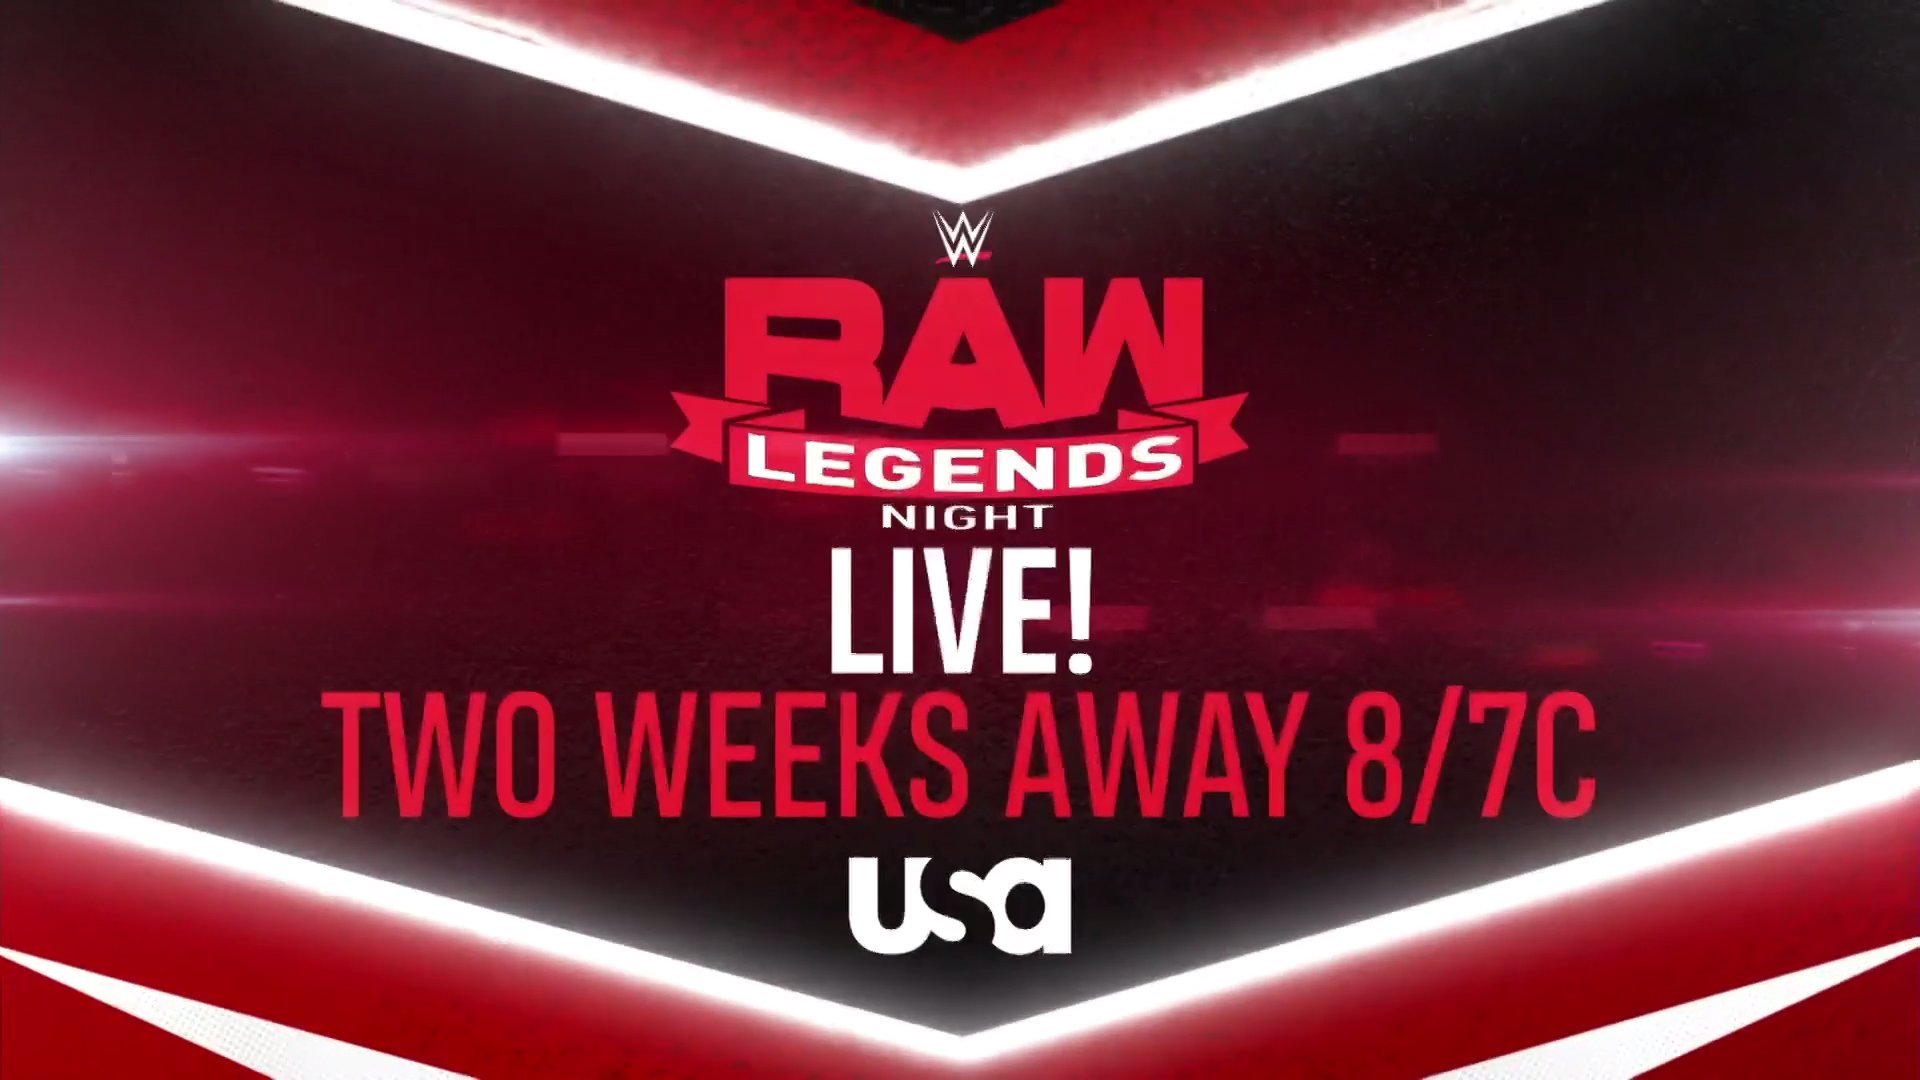 WWE Announces “Legends Night” Raw, Featuring Hulk Hogan, Ric Flair and